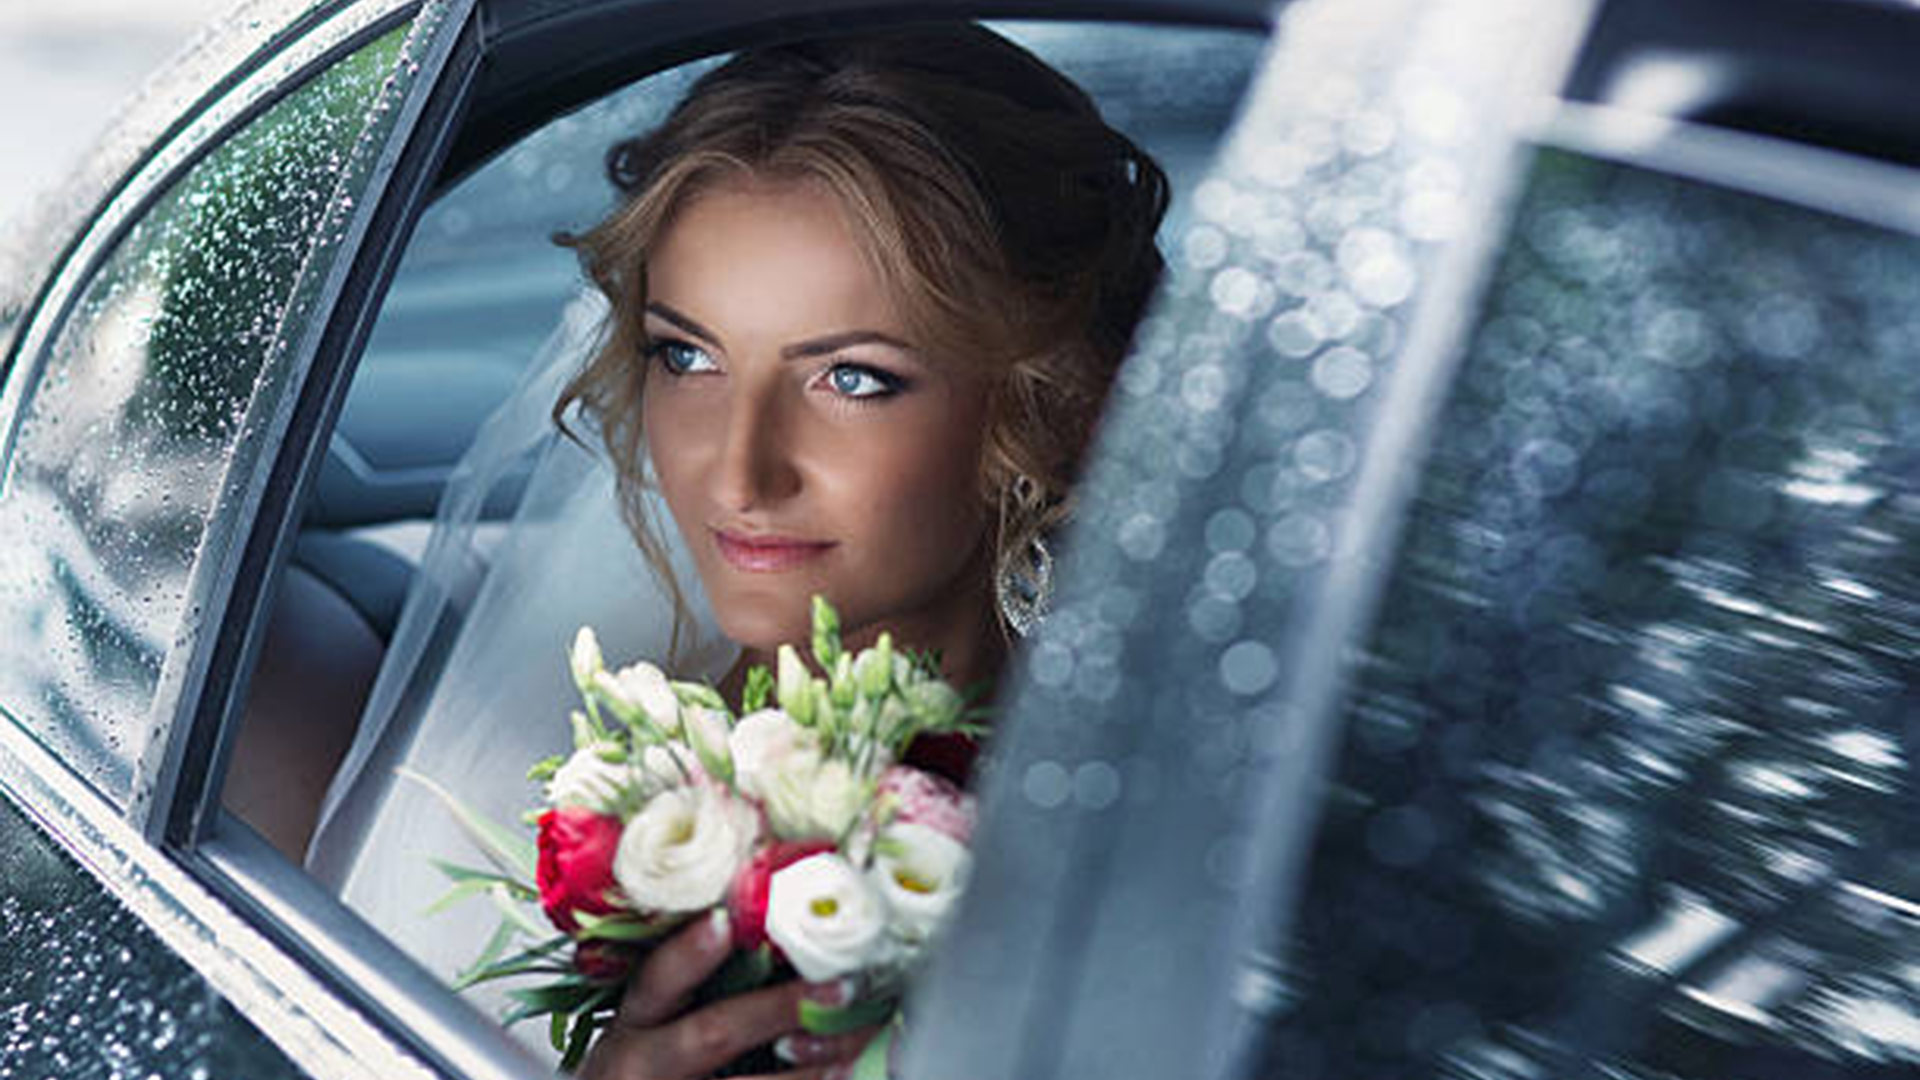 Luxury Car Service in NYC | Beautiful blonde bride posing in wedding car on rainy day